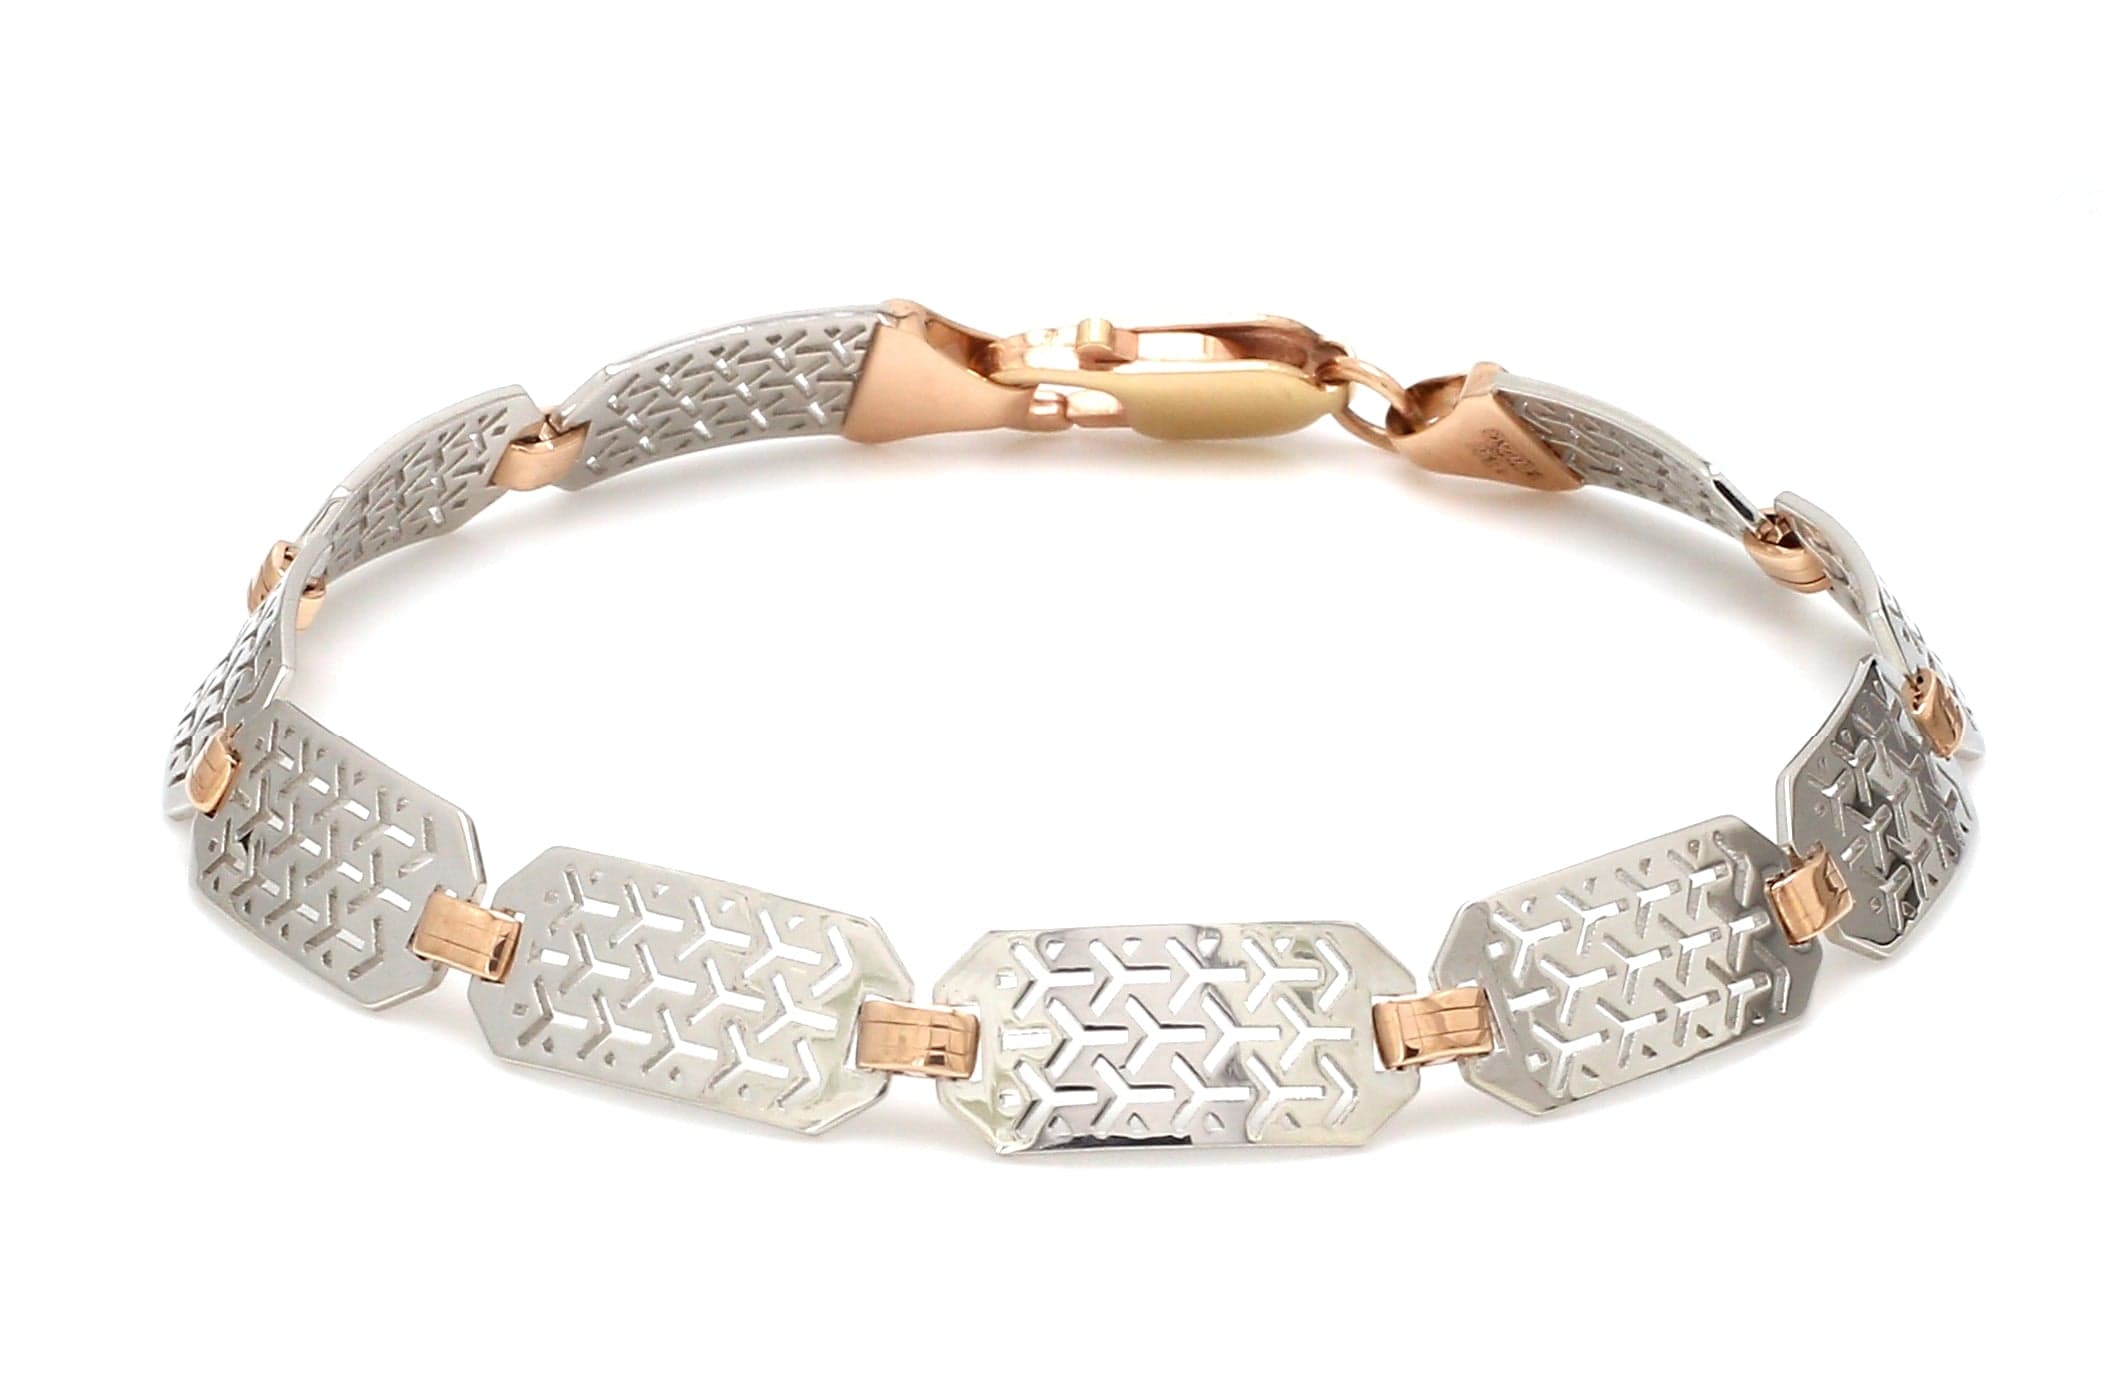 ROSE GOLD BRACELET BY JEWELROOF | Rose gold jewelry, Rose gold bracelet,  Gold